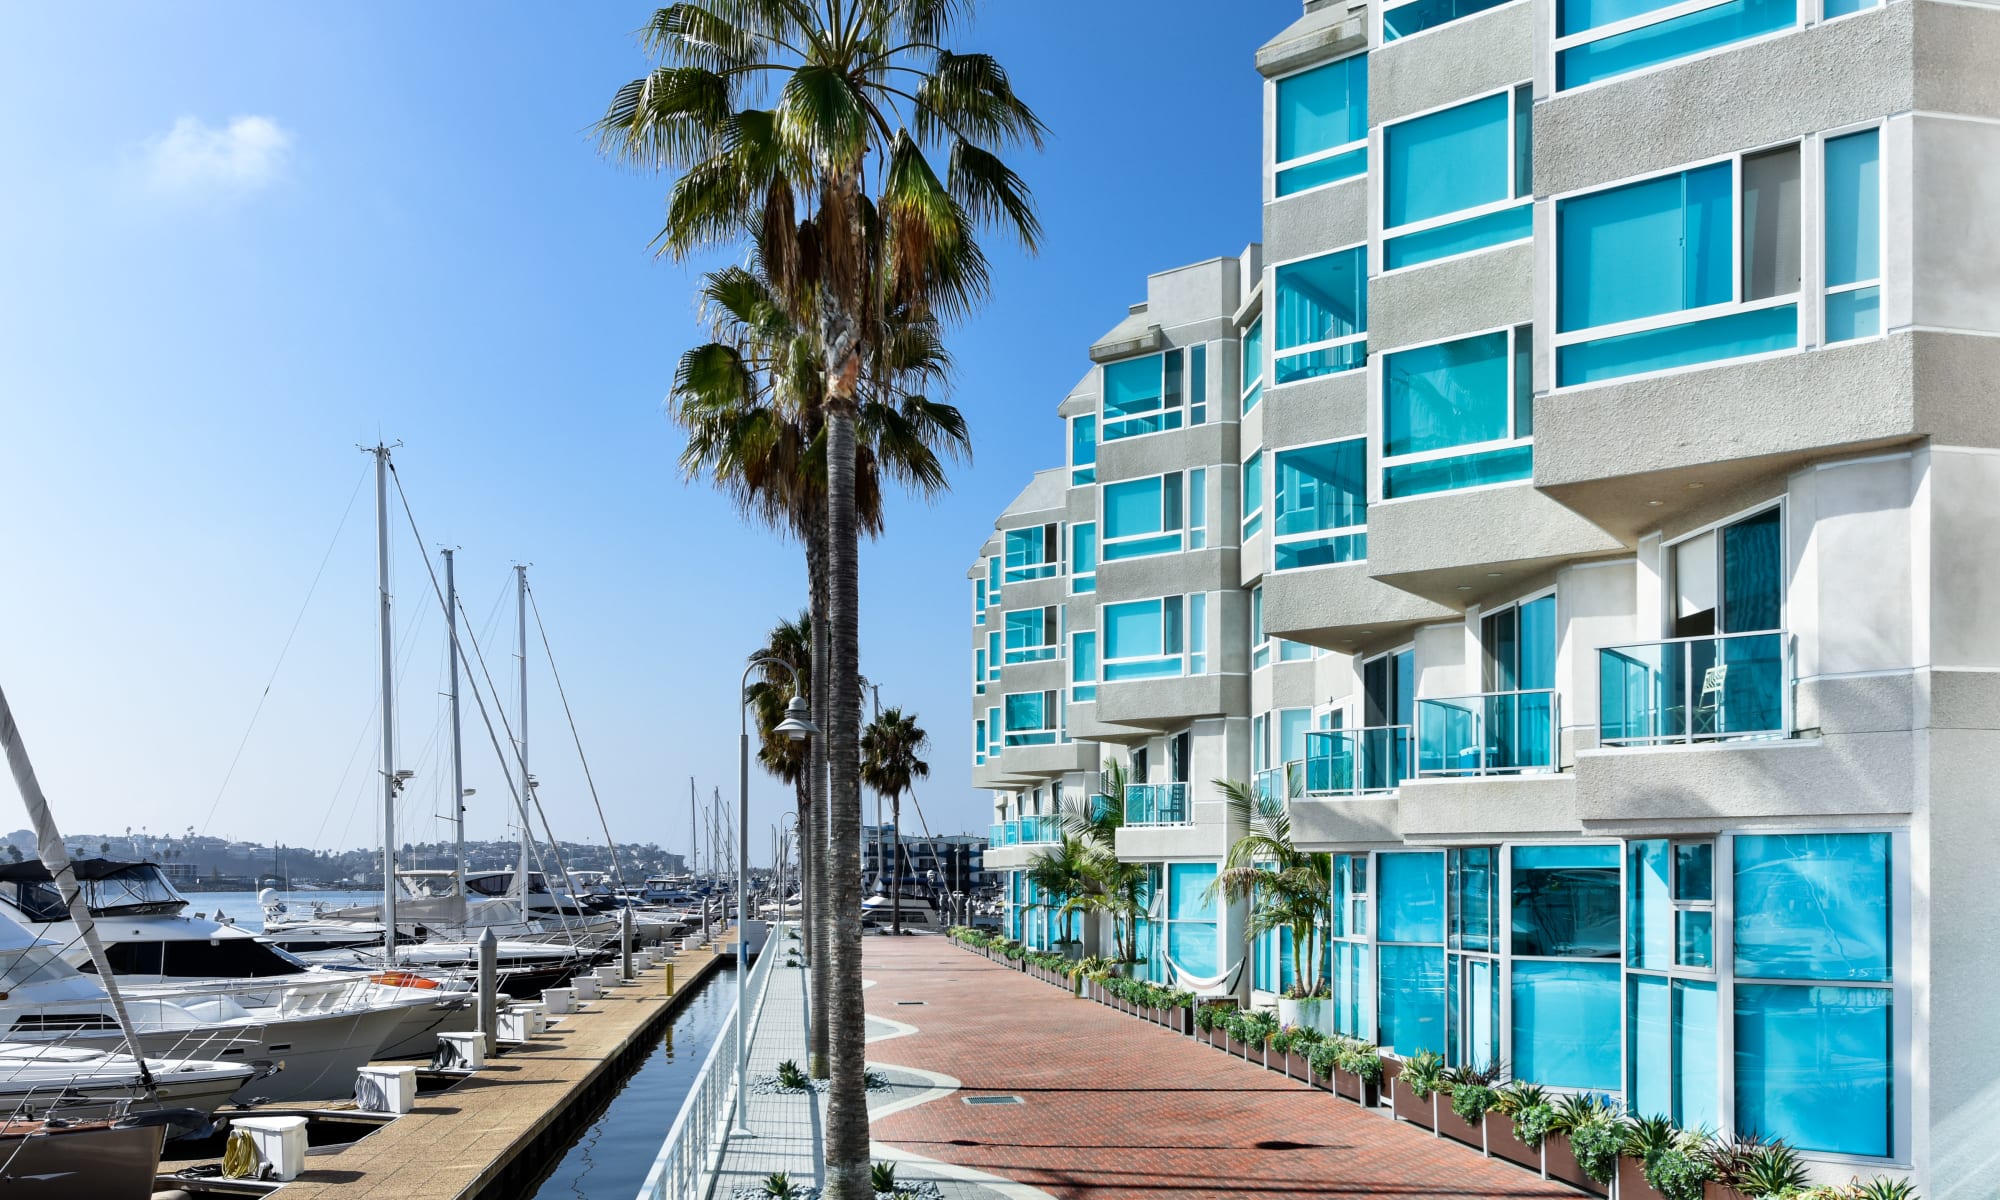 Apartments with large windows overlooking the marina at Esprit Marina del Rey in Marina del Rey, California